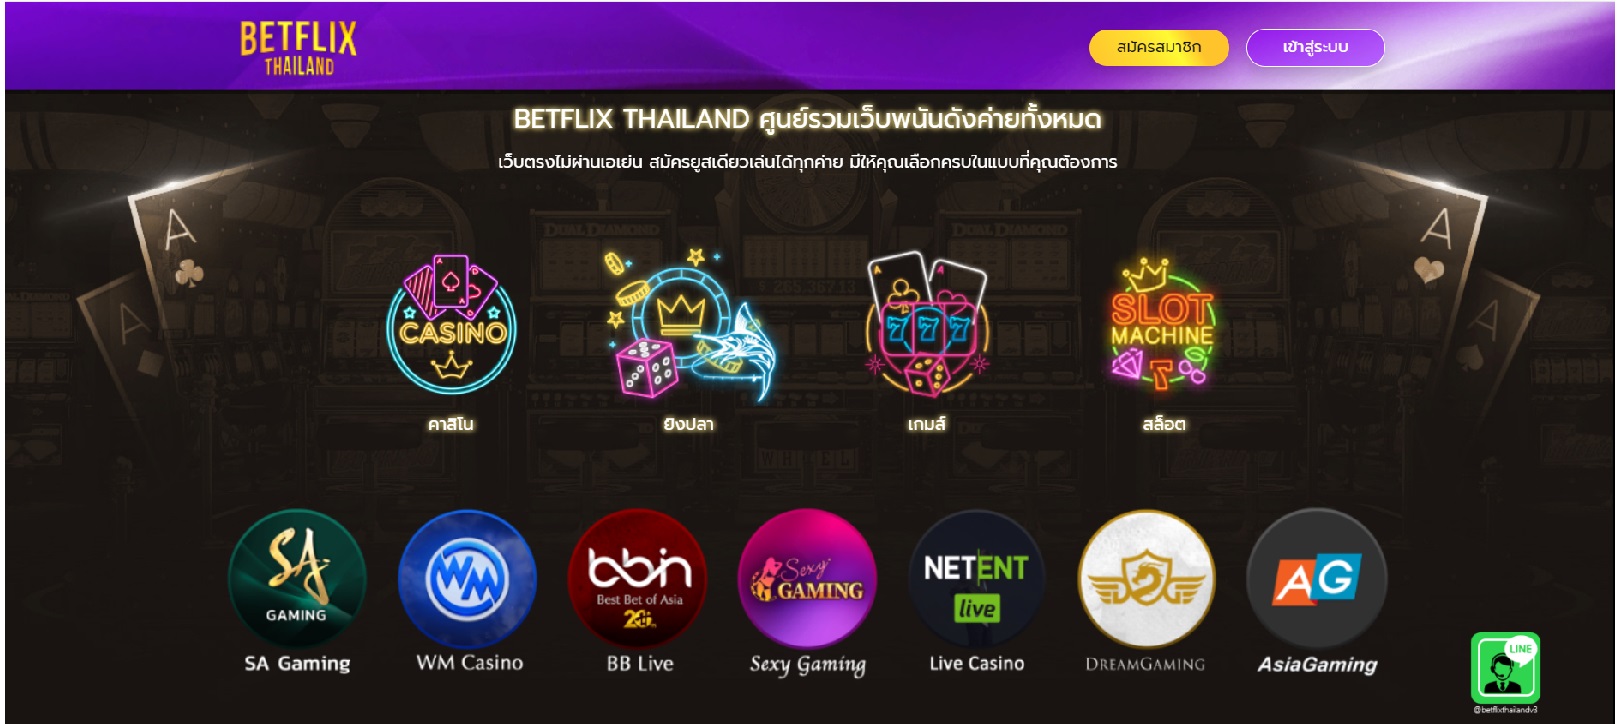 Beflix Thailand นำเสนอฟีเจอร์การเดิมพันและการพนันประเภทใดบ้าง